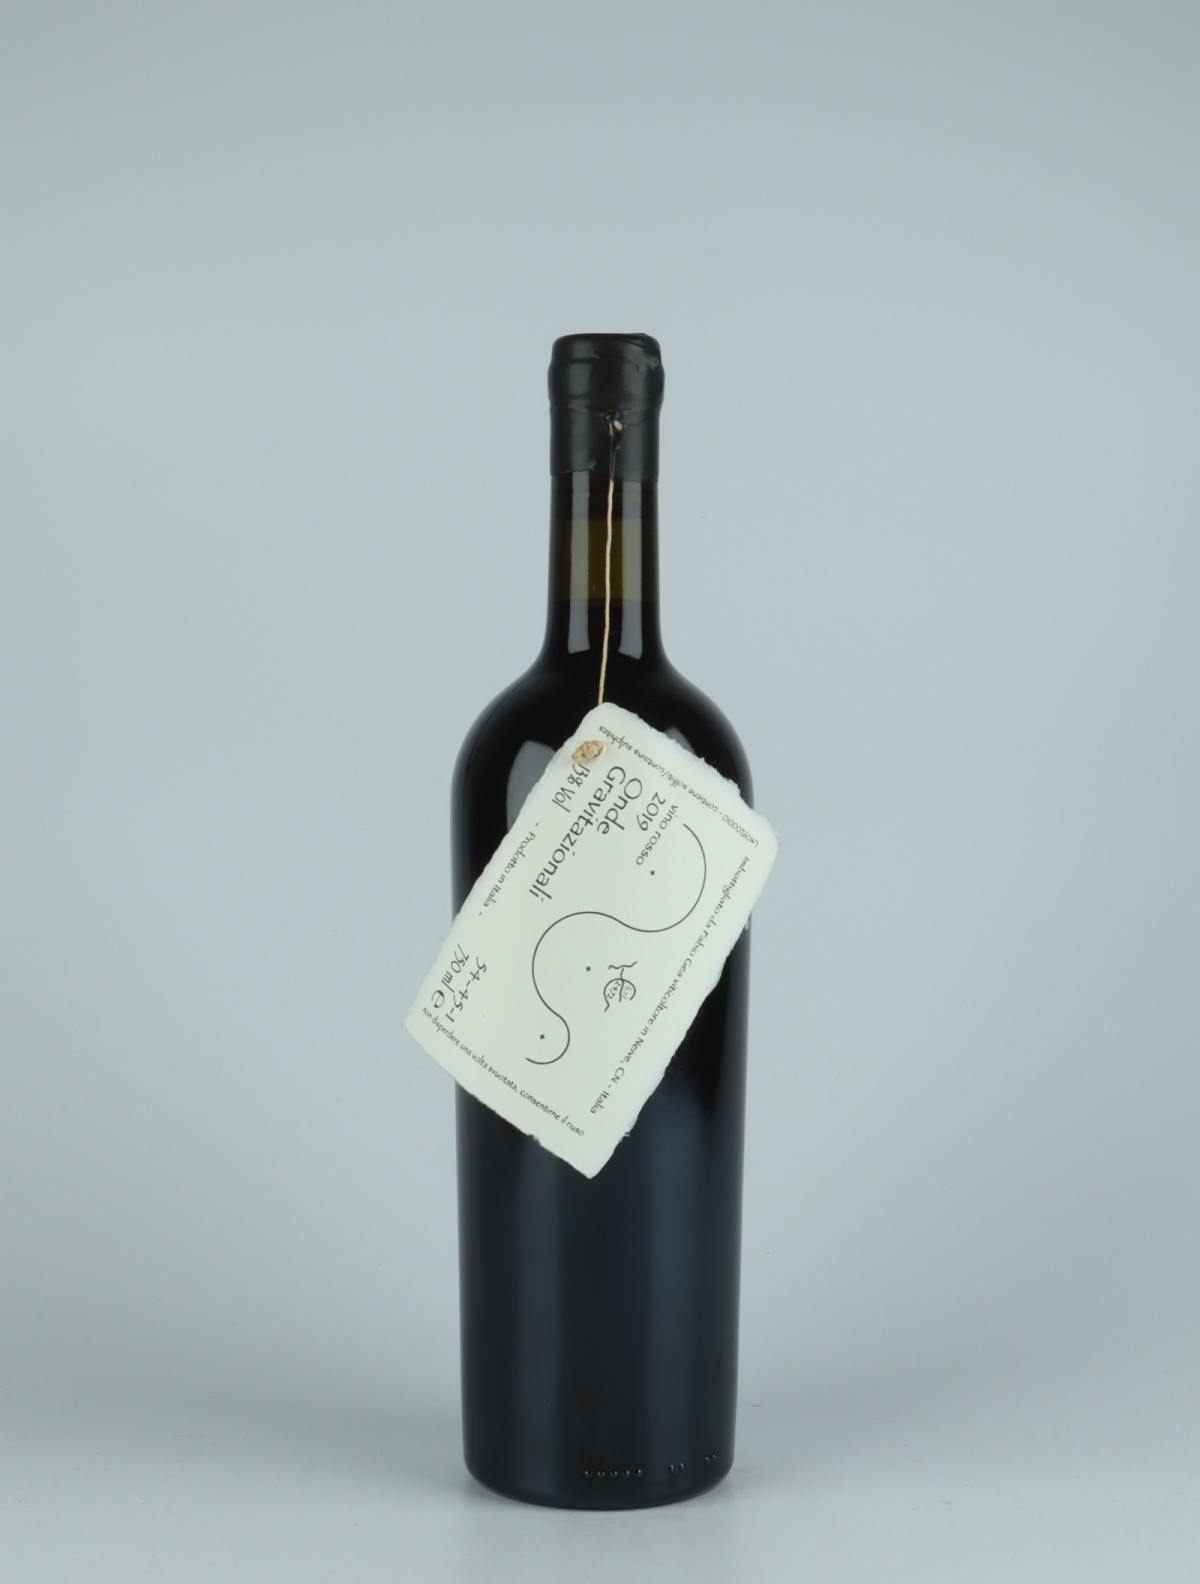 A bottle 2019 Onde Gravitazionali 54 45 1 Red wine from Fabio Gea, Piedmont in Italy